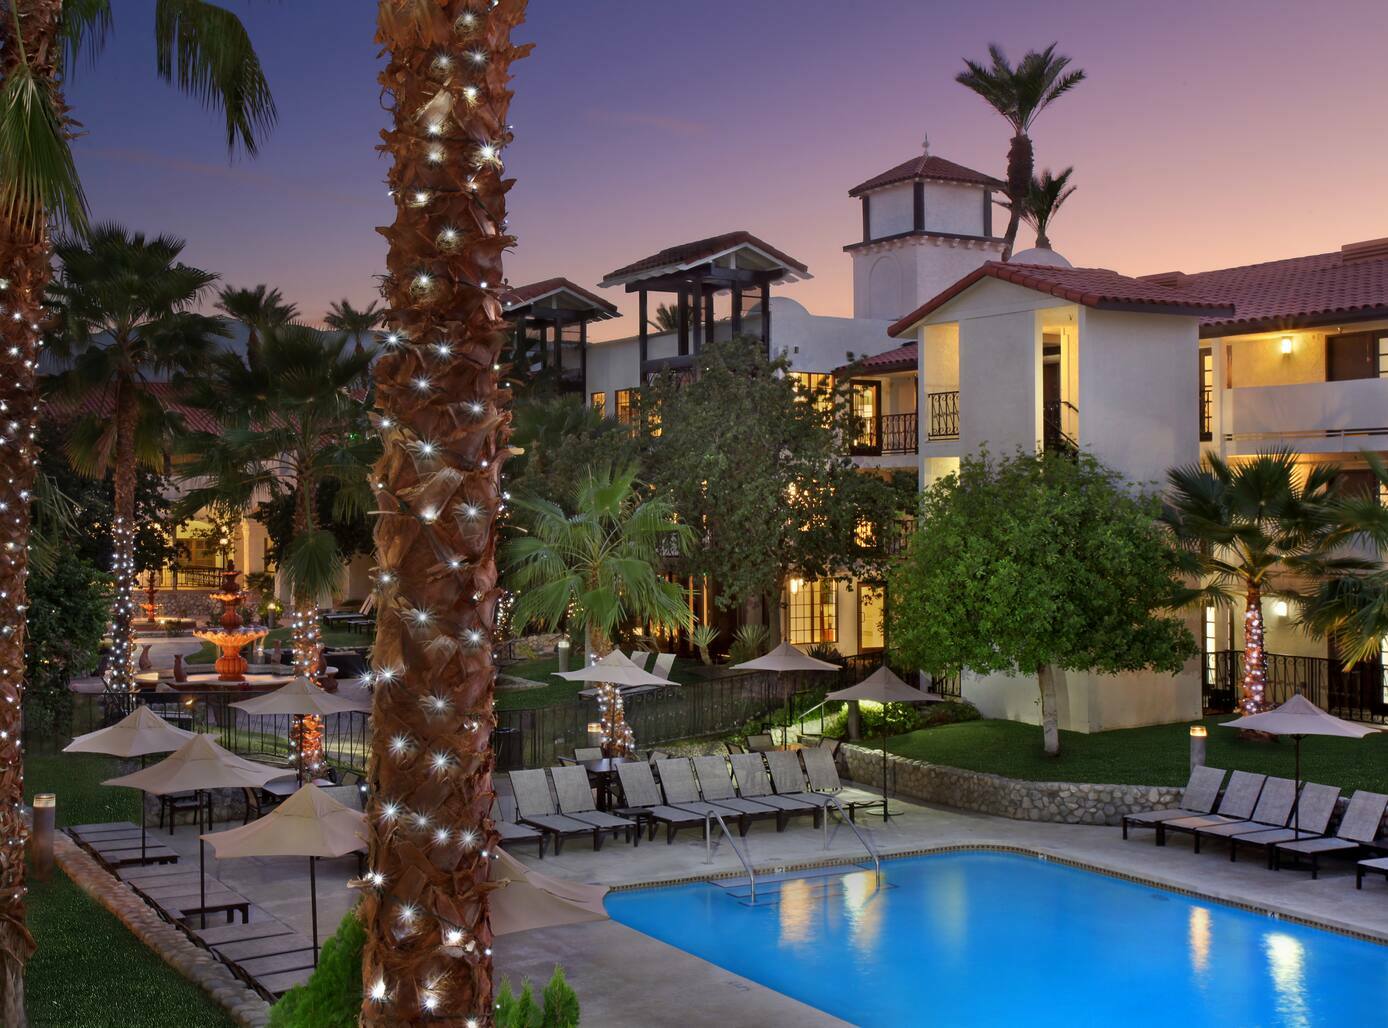 Photo of Embassy Suites by Hilton Palm Desert, Palm Desert, CA